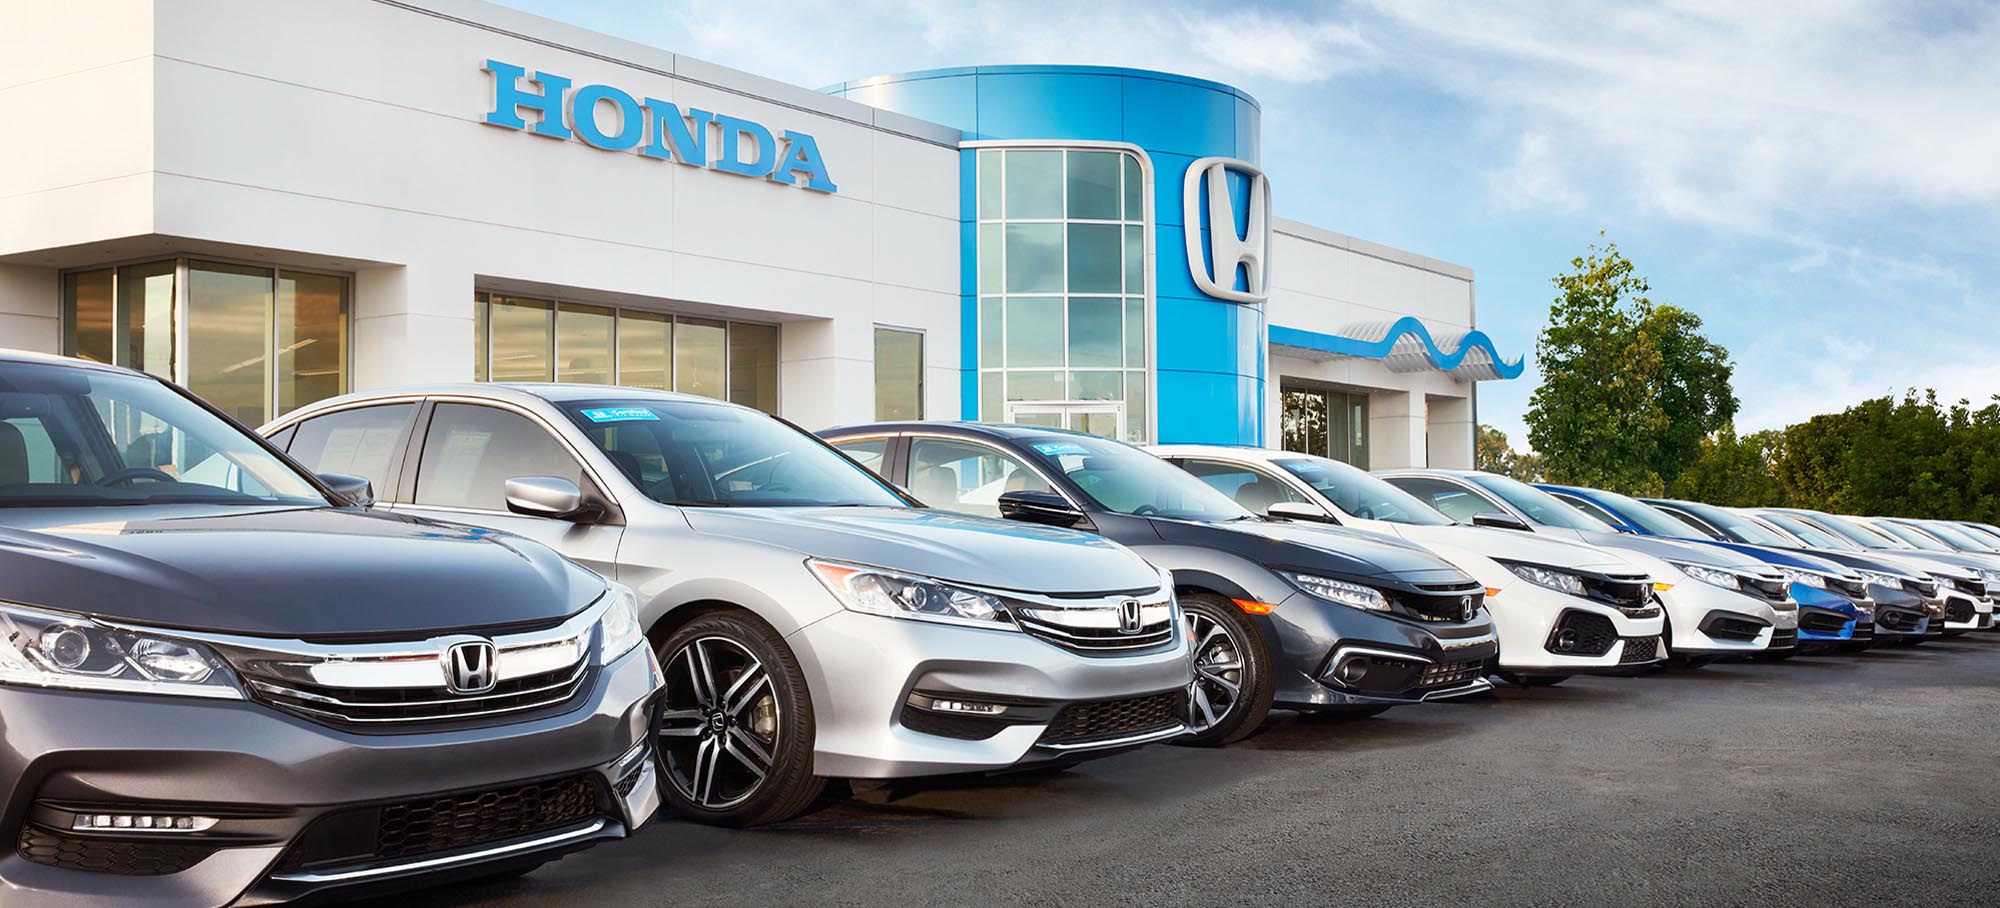 New Used Honda Dealership In Everett Wa Klein Honda